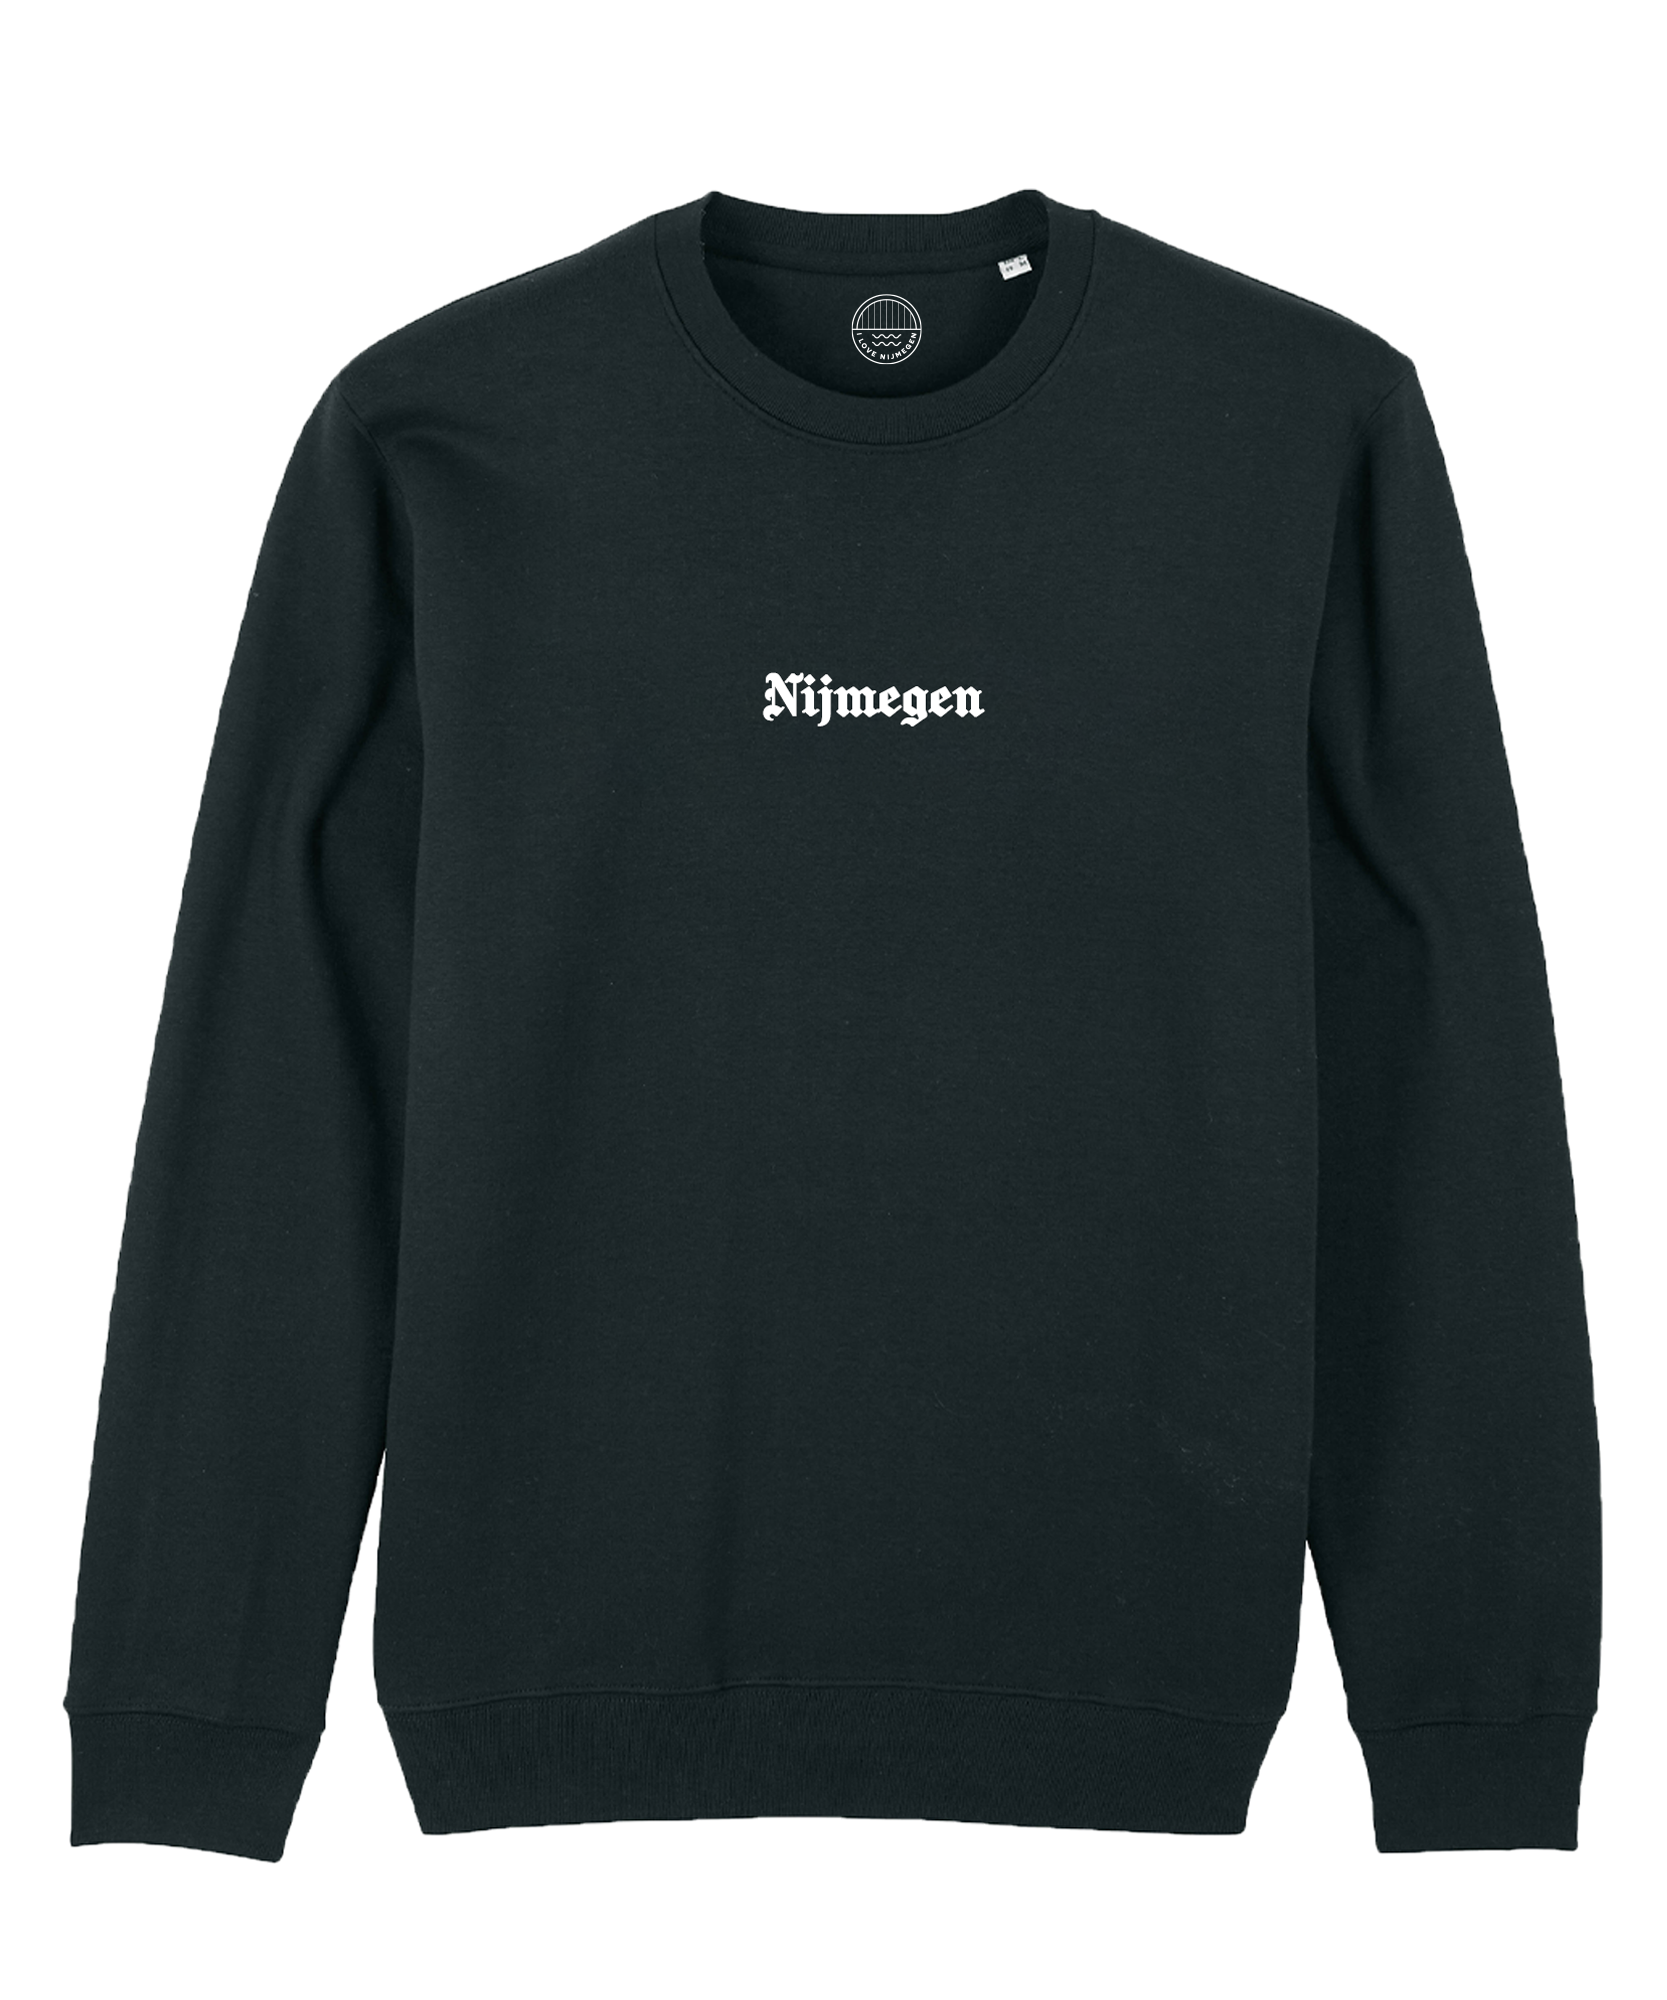 Nijmegen - Nimega - Sweater - Black